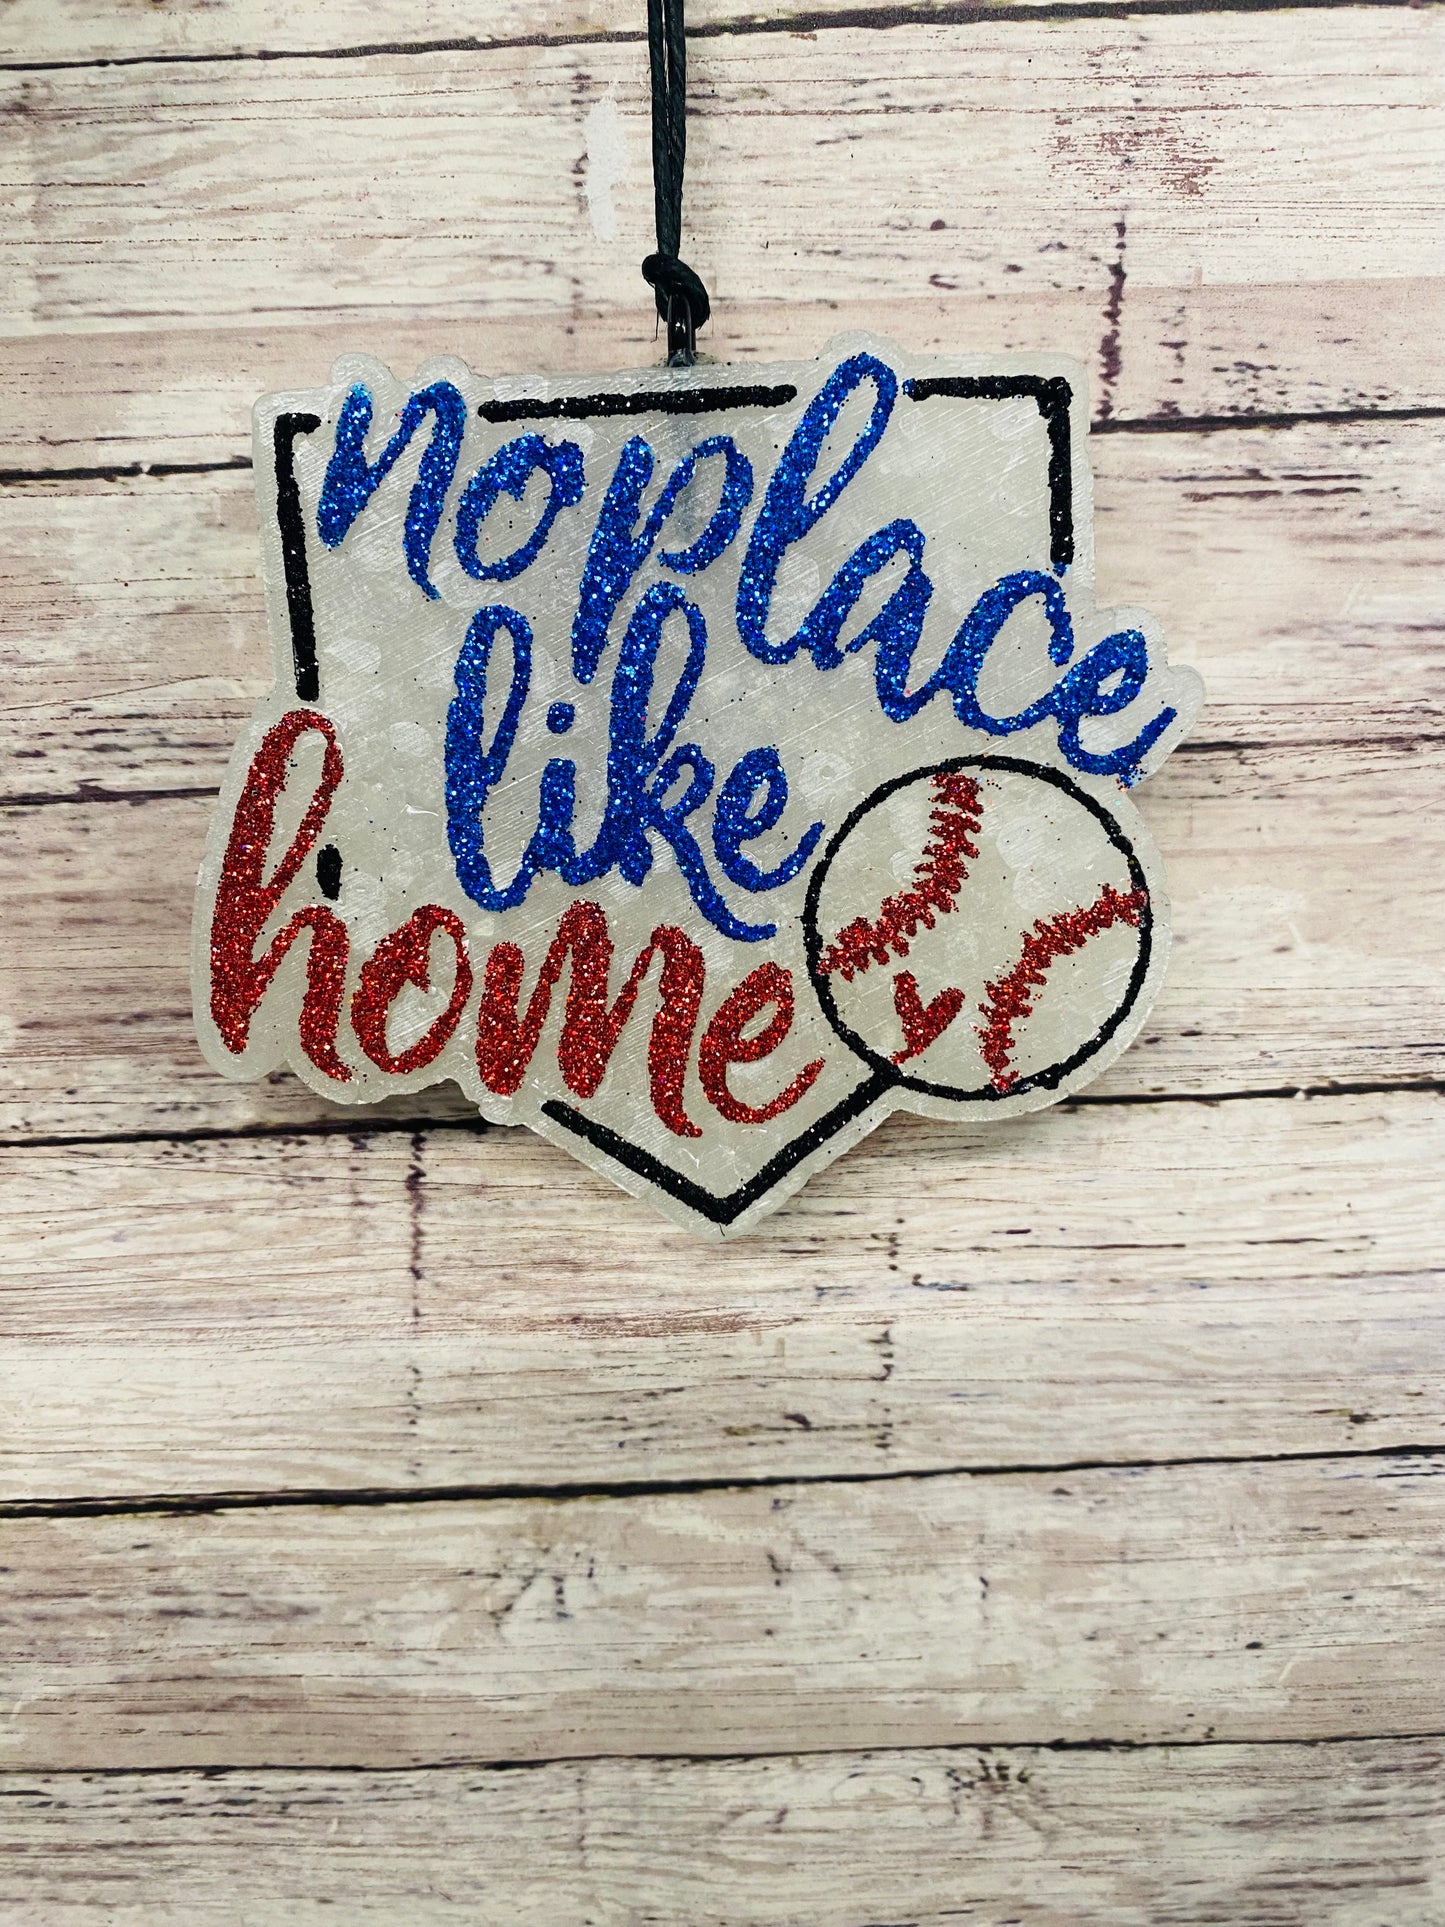 No Place Like Home (Baseball/Softball)